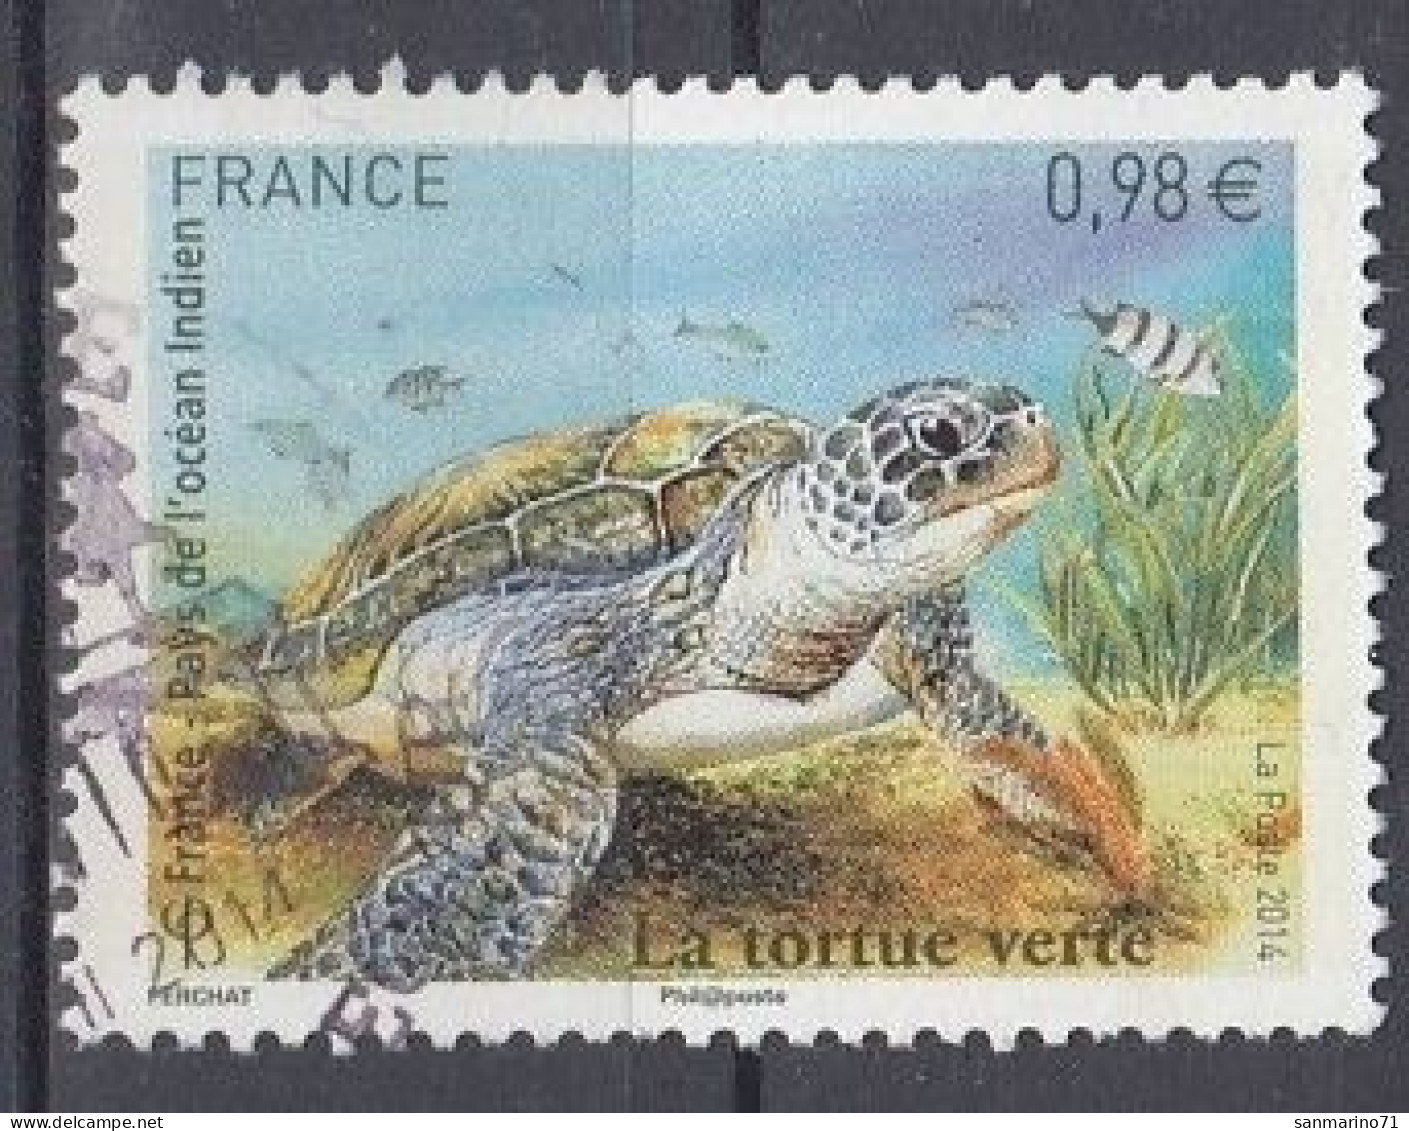 FRANCE 5996,used,falc Hinged - Schildkröten